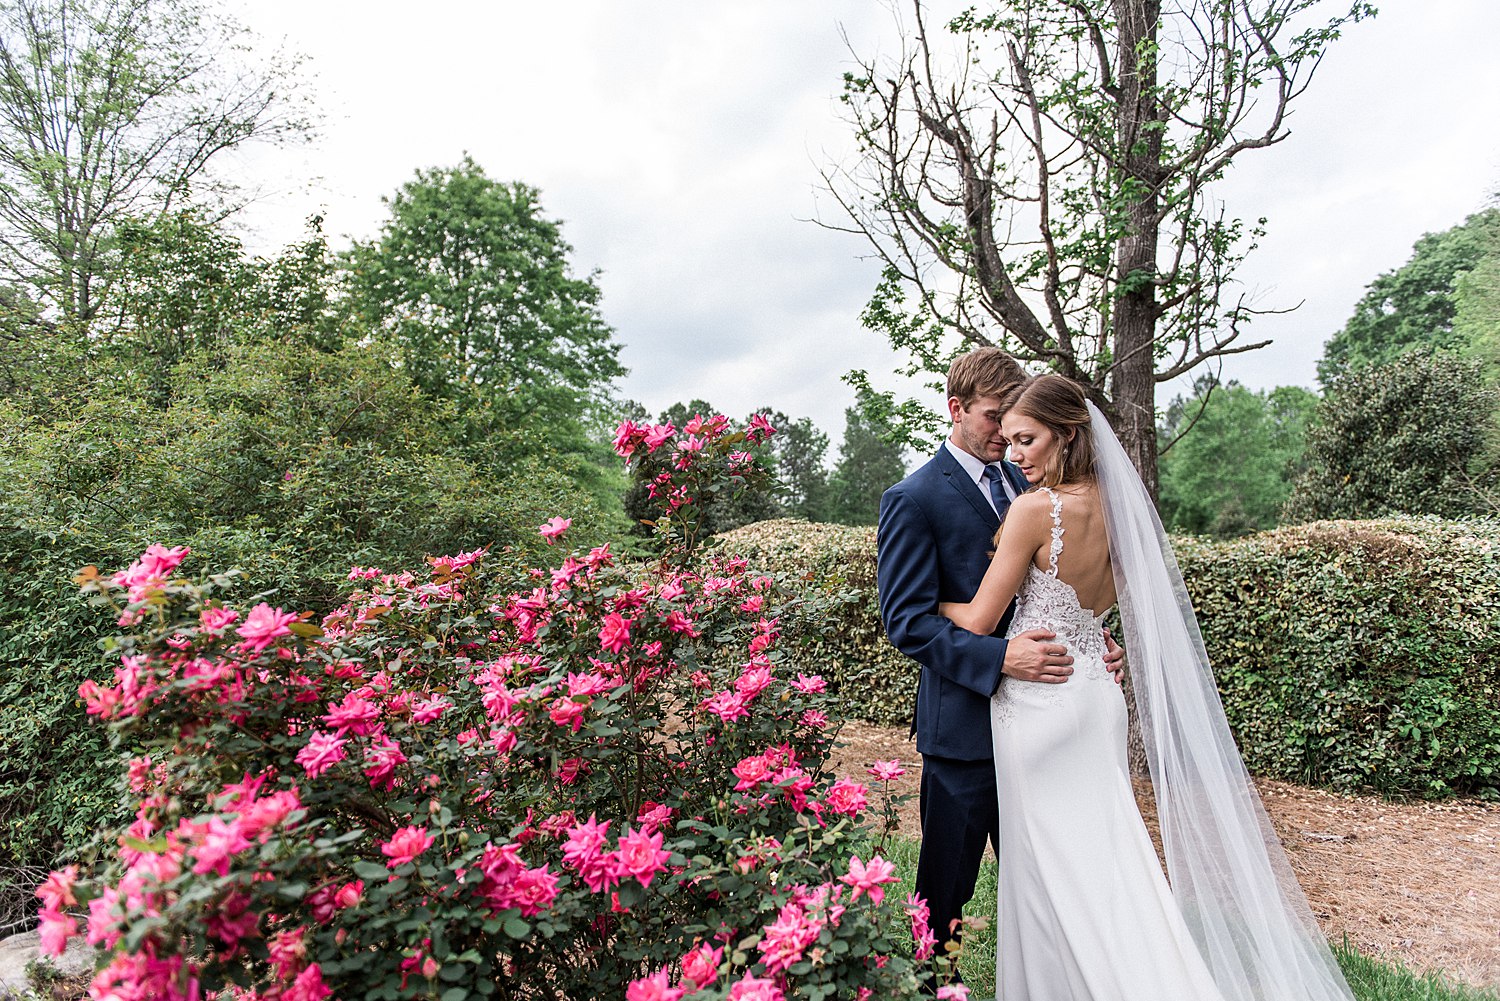 jessica & Andrew | walnut hill farm wedding | knoxville wedding photographer | juicebeats photography | wedding photography in knoxville